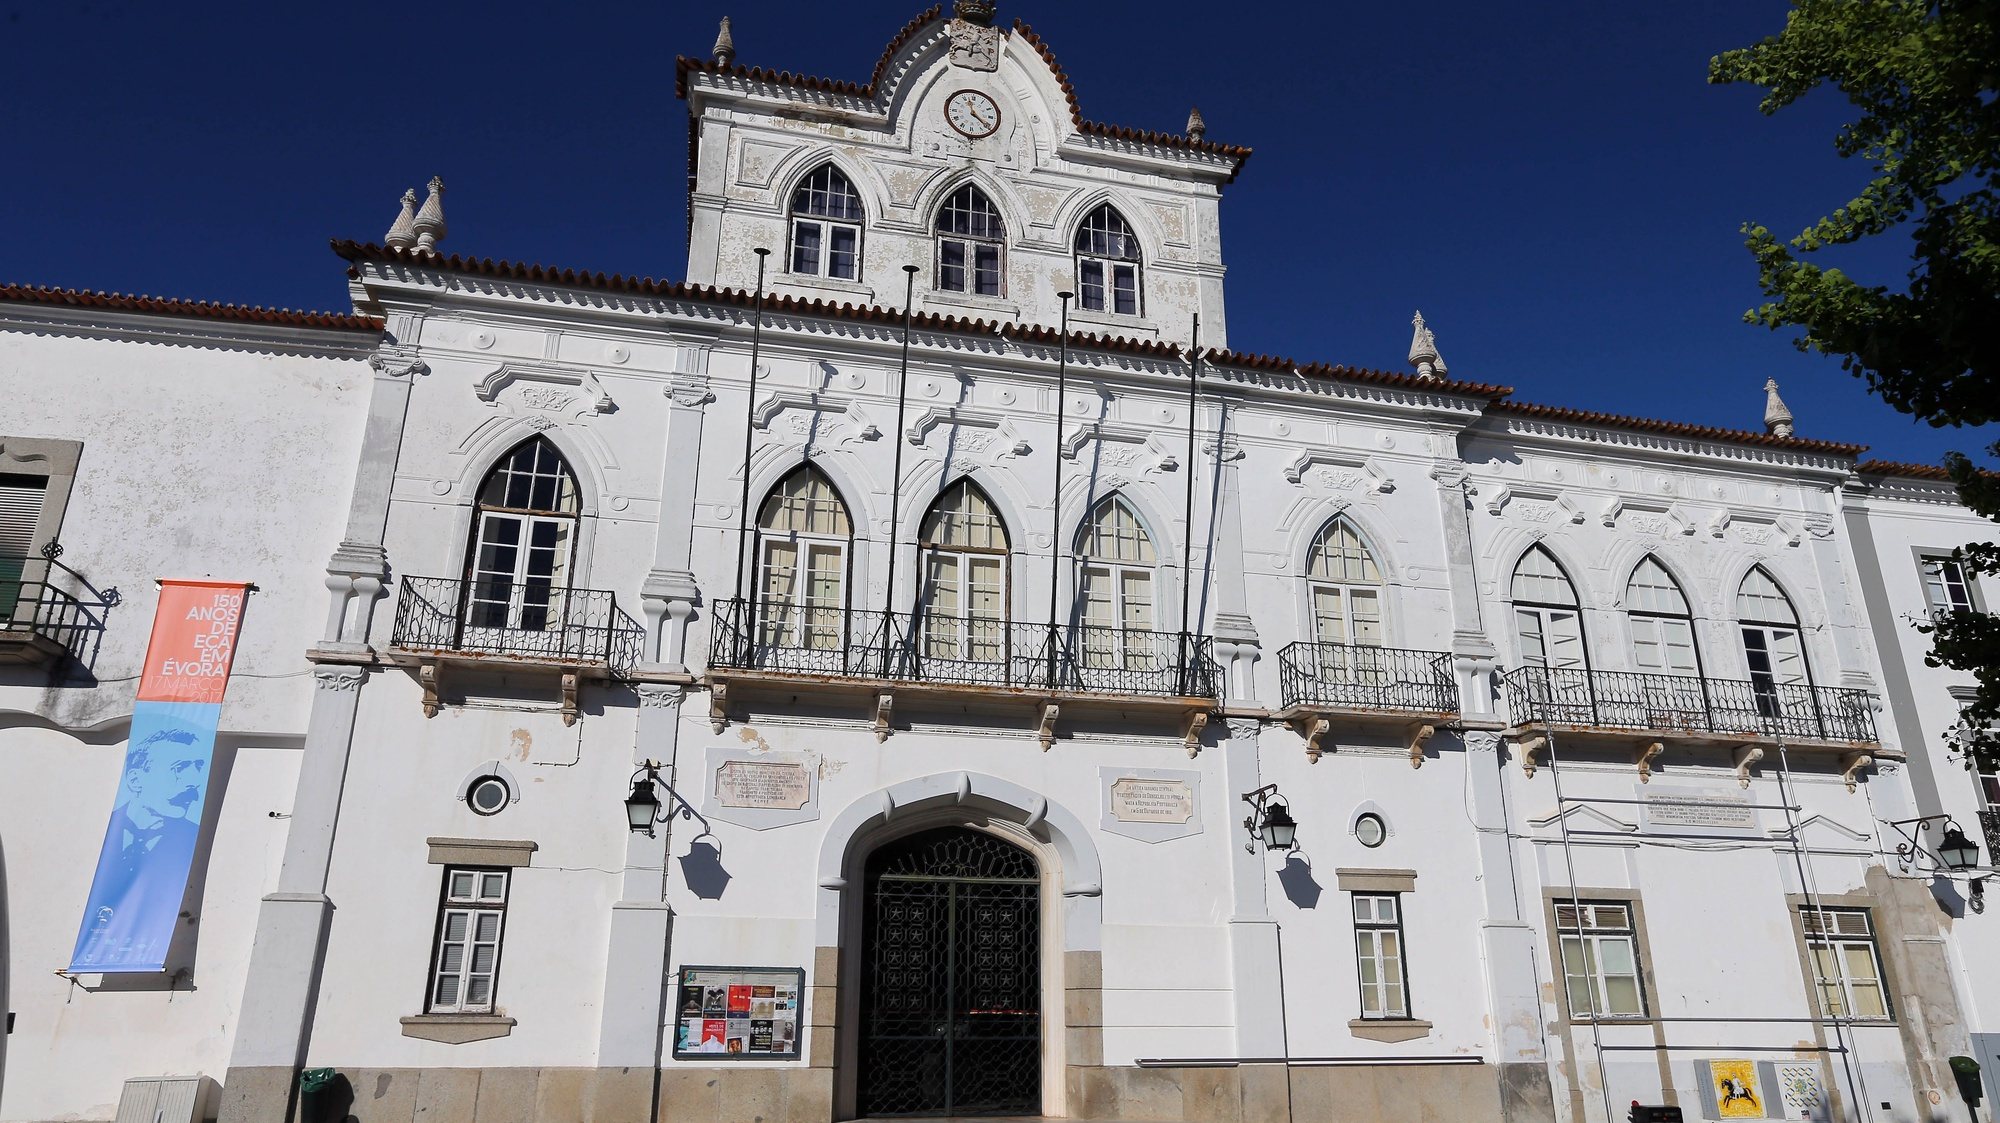 Fachada do edifício da Câmara Municipal de Évora, 28 de dezembro de 2017. NUNO VEIGA/LUSA